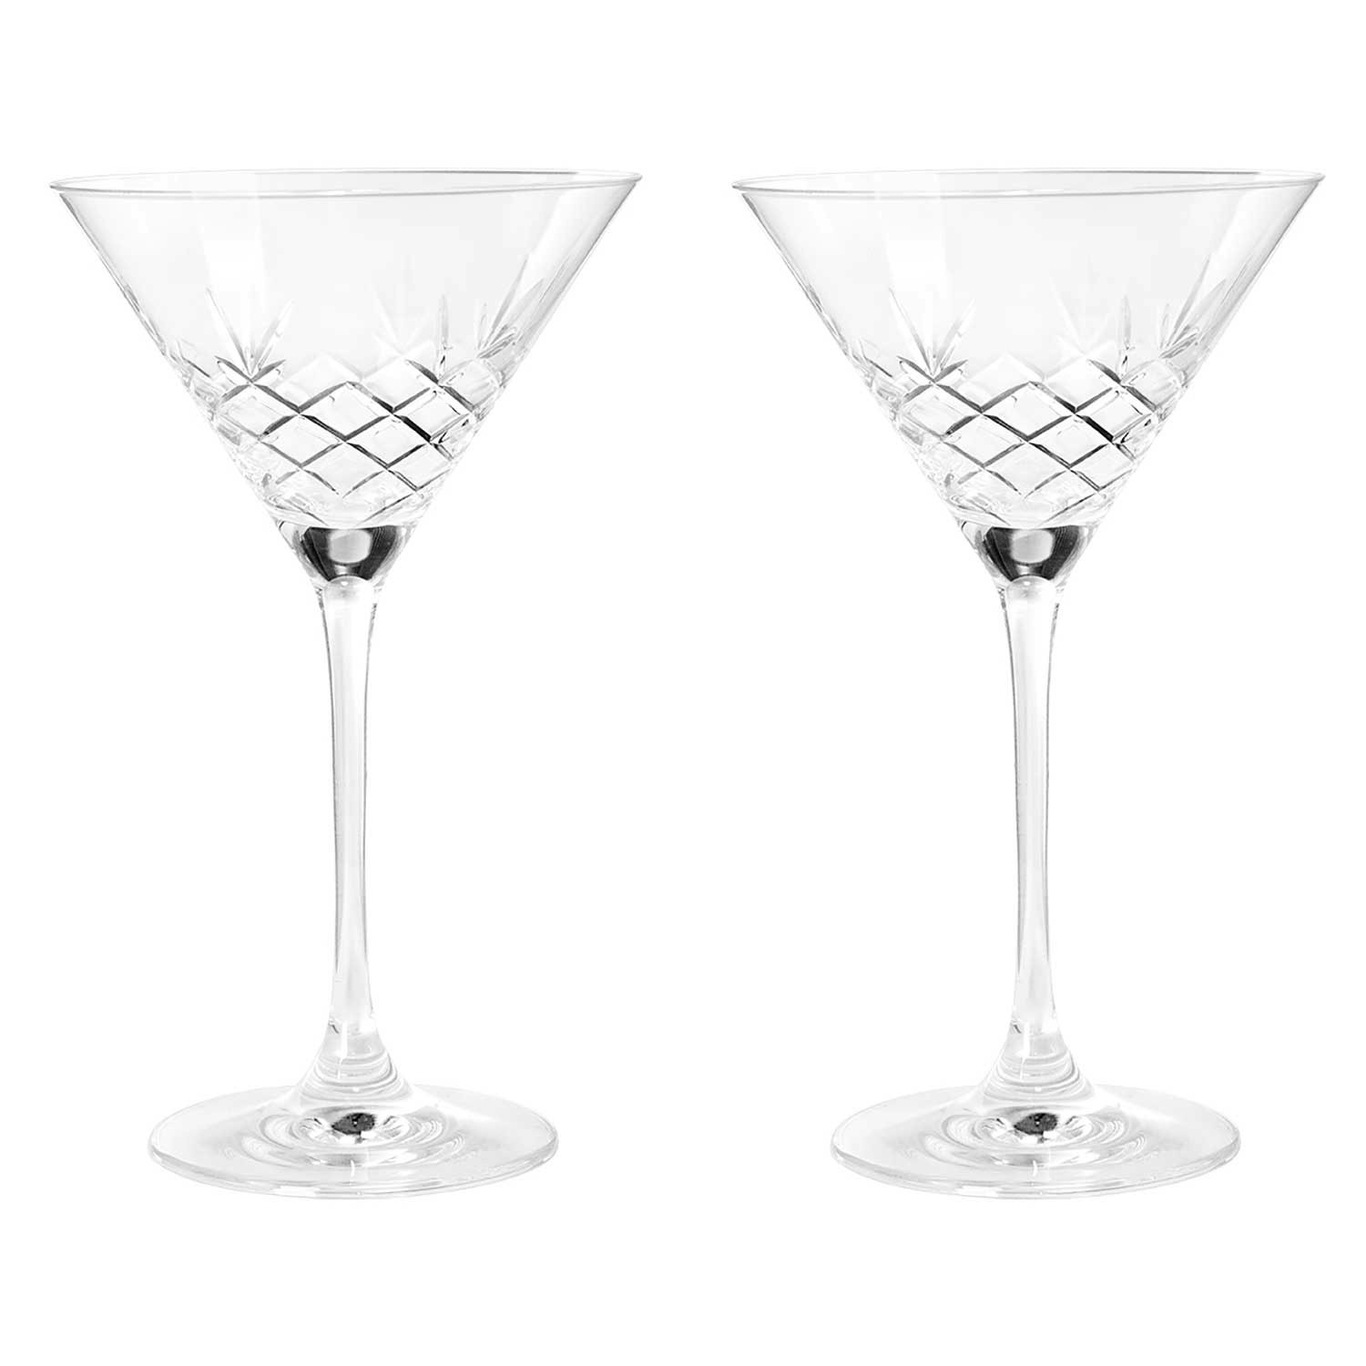 https://royaldesign.com/image/2/frederik-bagger-crispy-cocktail-glass-2-pcs-0?w=800&quality=80